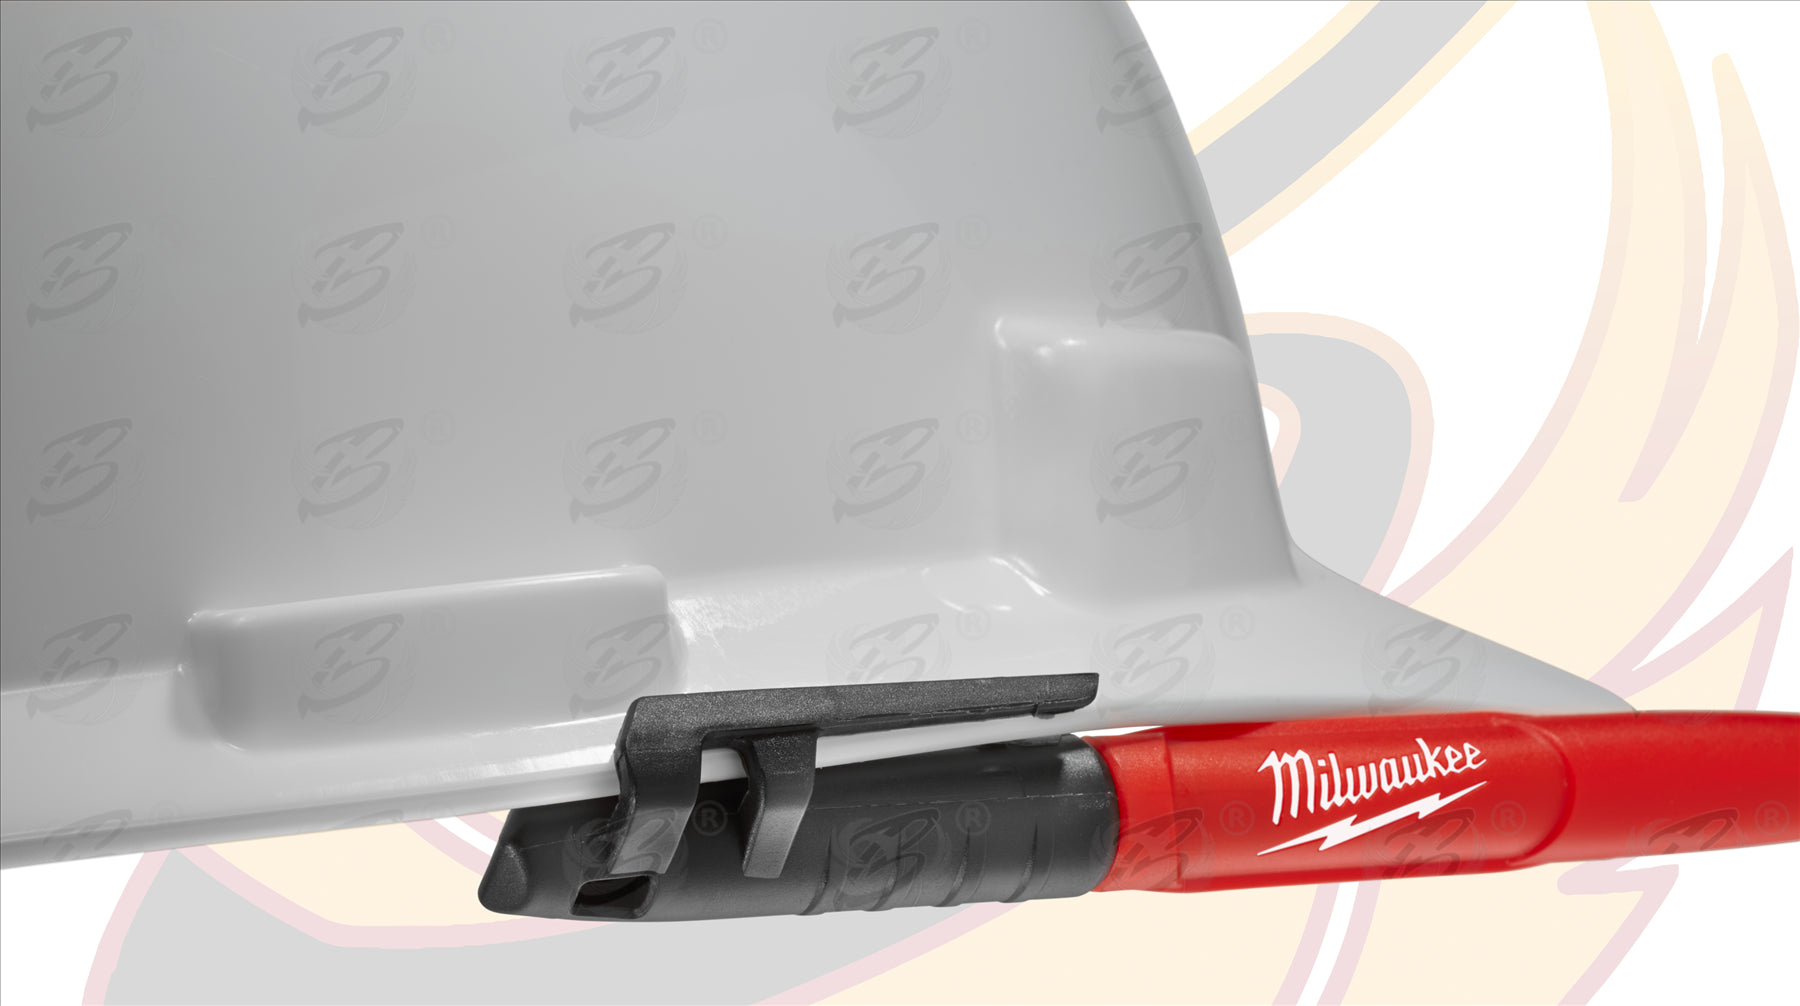 MILWAUKEE INKZALL 1mm ALL SURFACE MARKER PEN ( x36 )